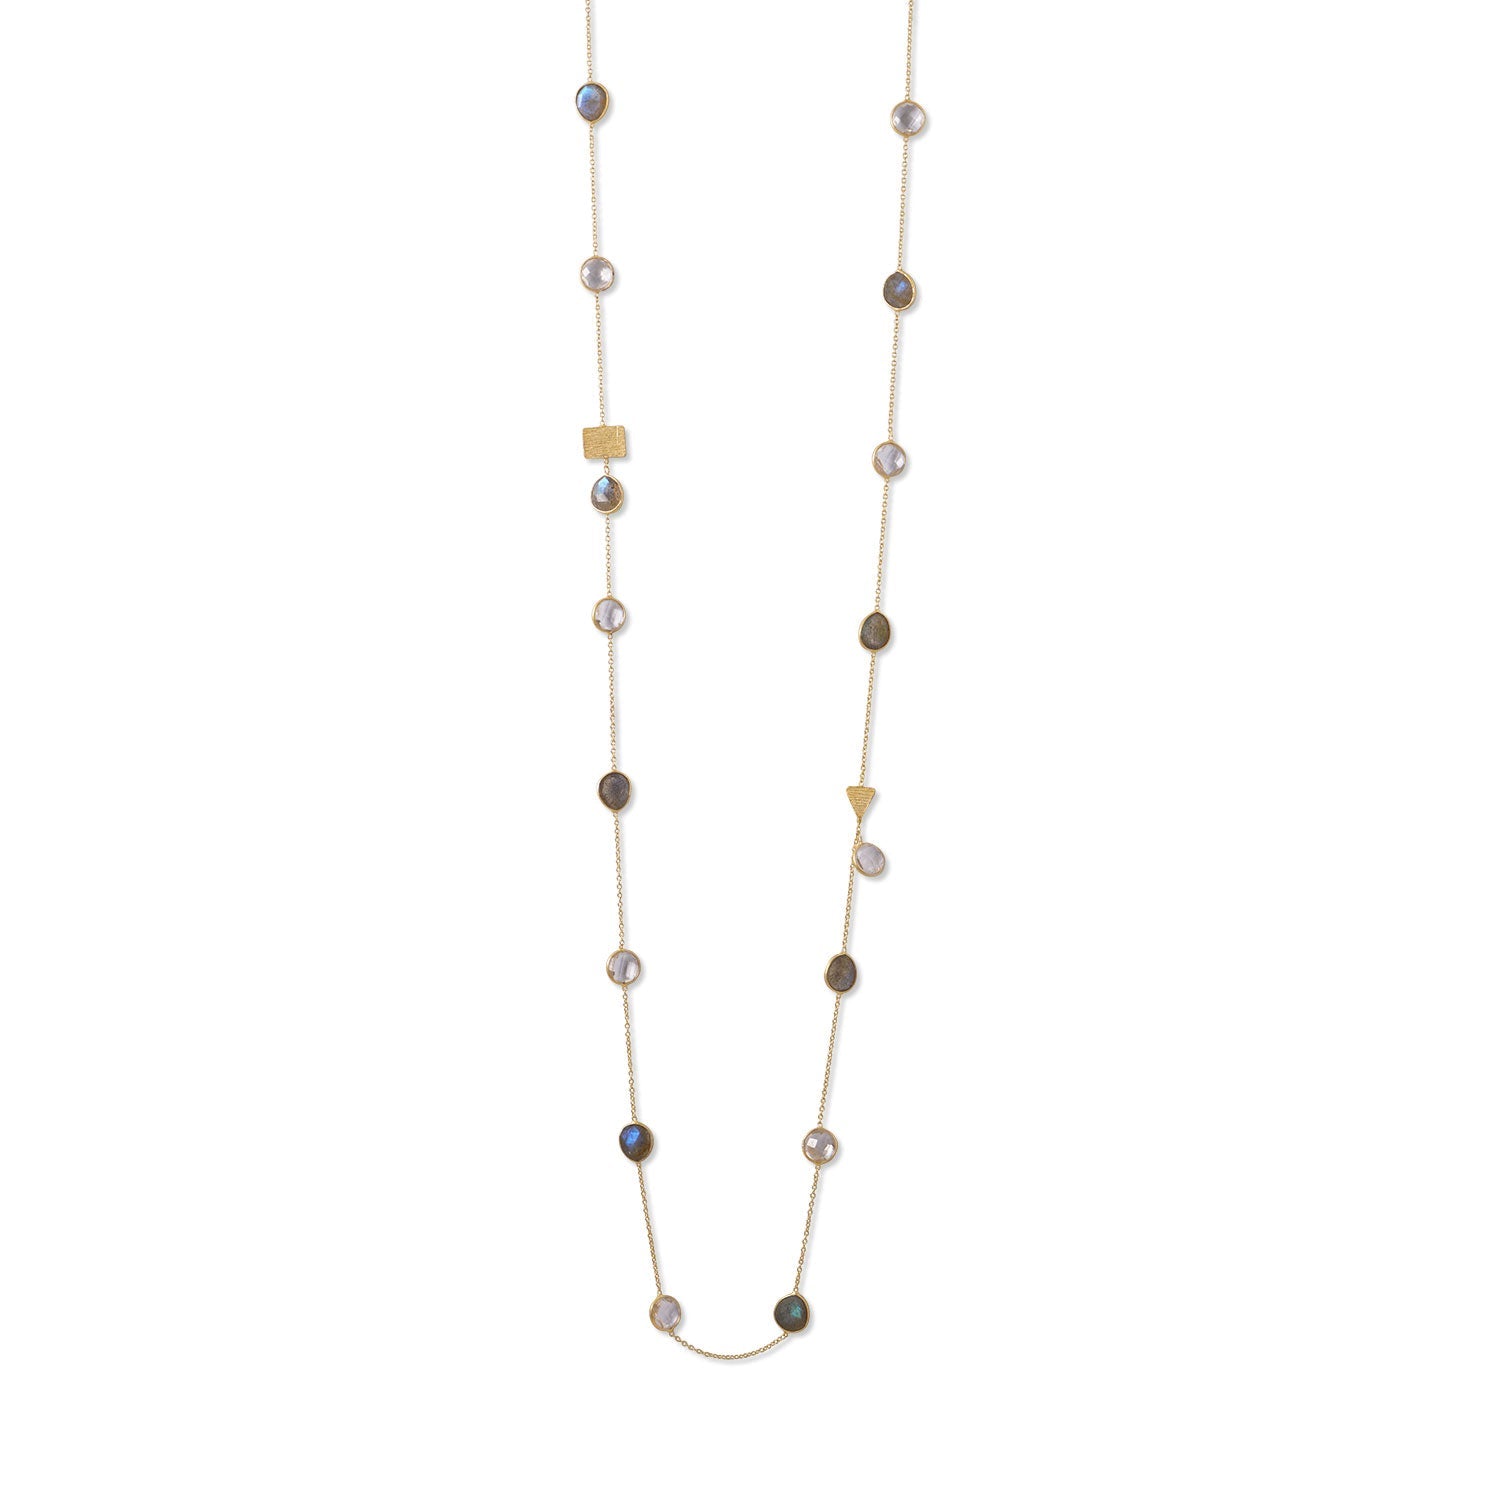 14 Karat Gold Plated Labradorite and Clear Quartz Endless Necklace